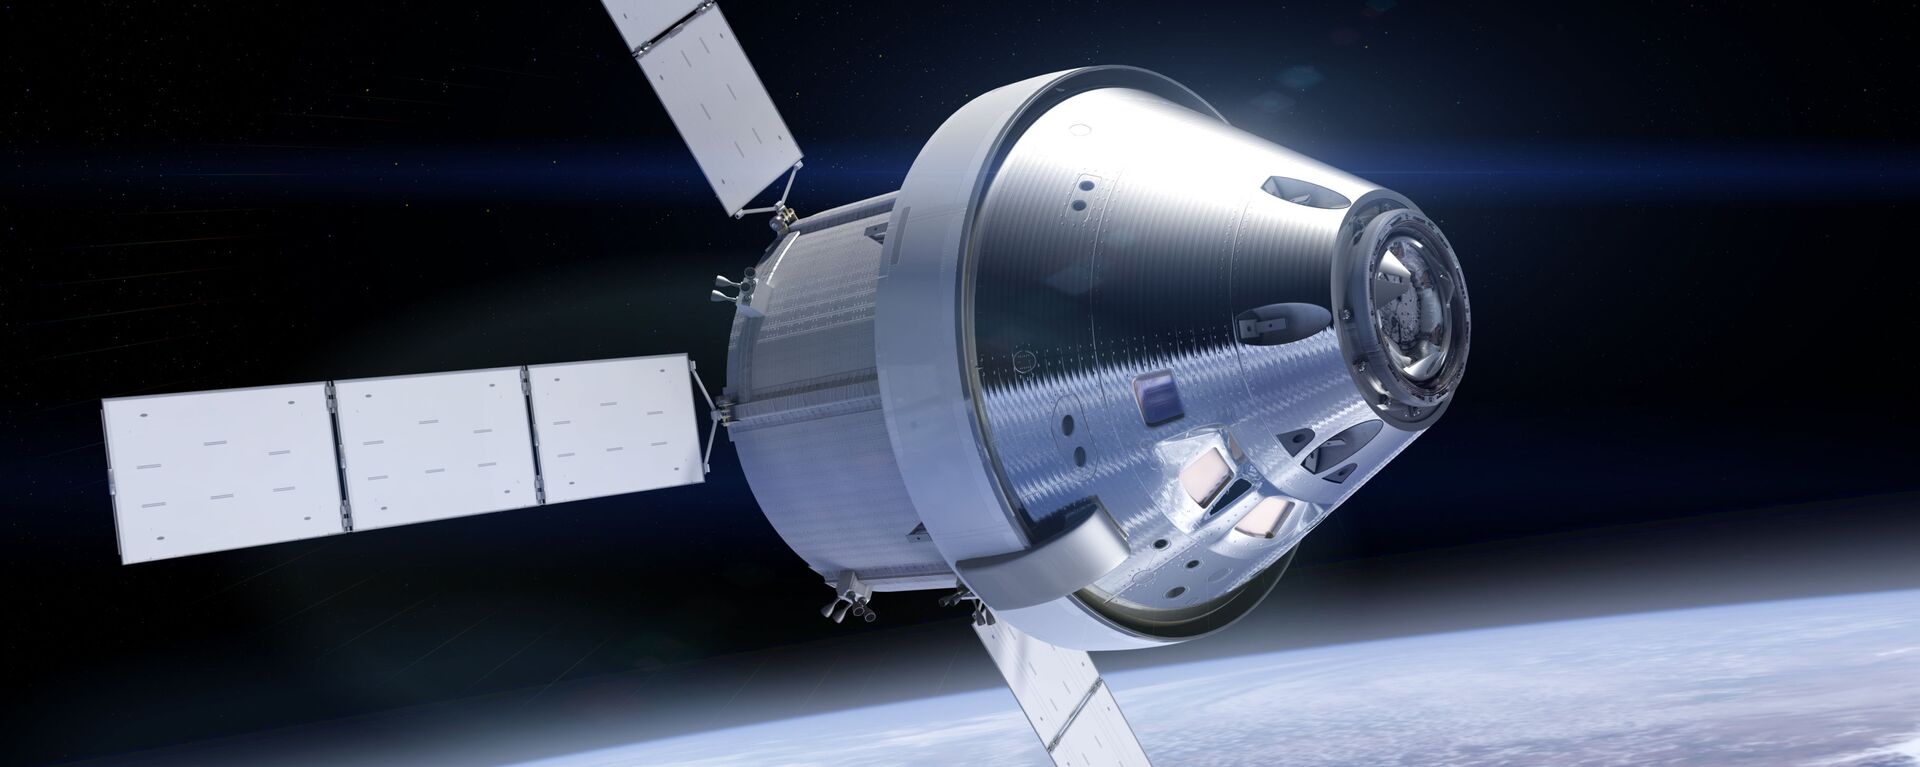 NASA：“猎户座”飞船将于12月11日从月球轨道返回地球 - 俄罗斯卫星通讯社, 1920, 03.12.2022